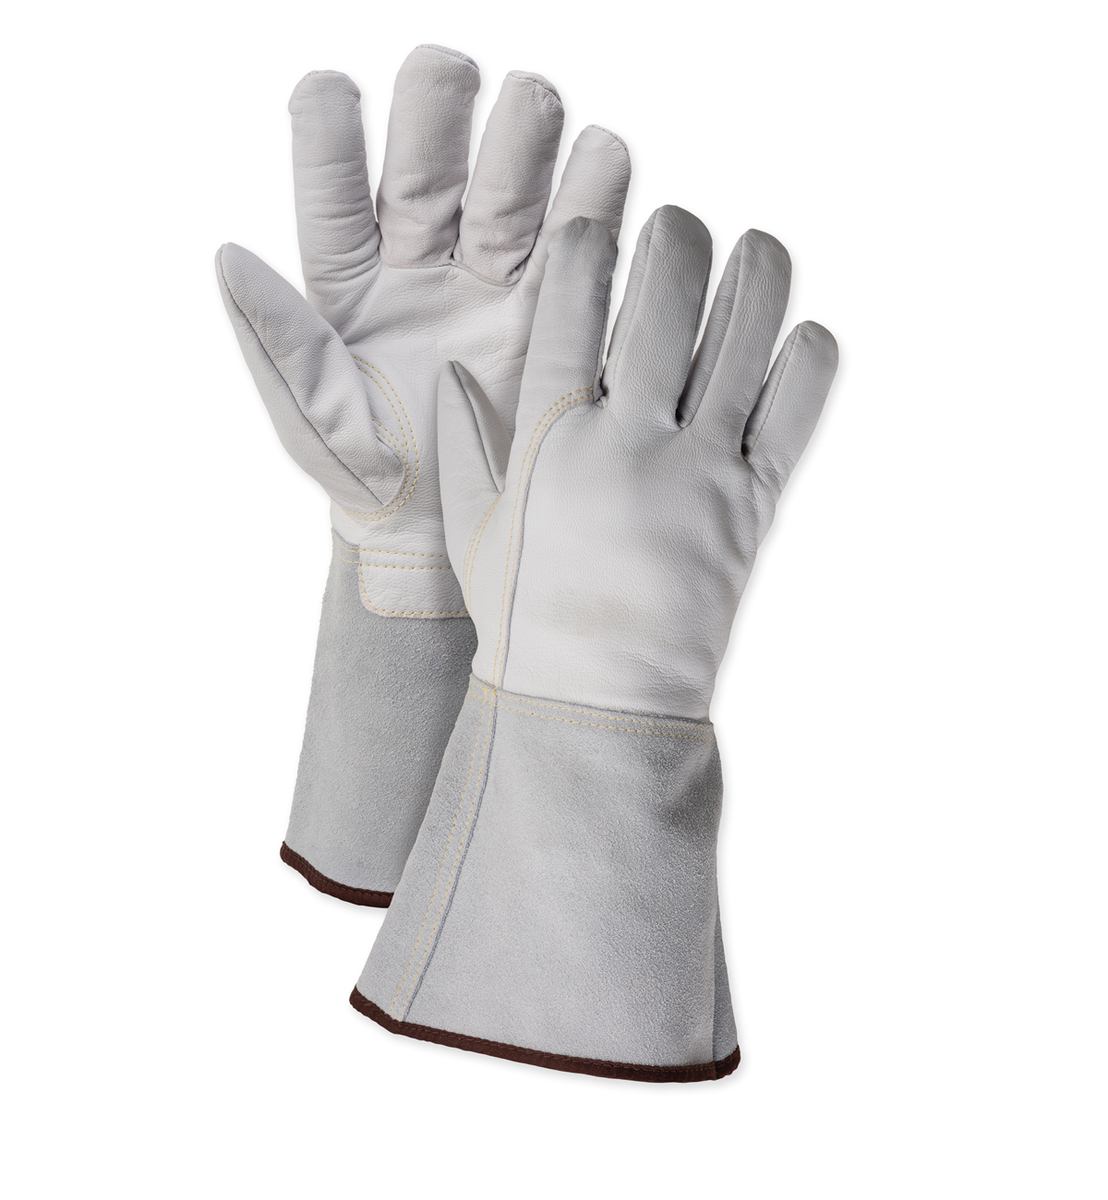 Wells Lamont Large Goatskin Cut Resistant Gloves